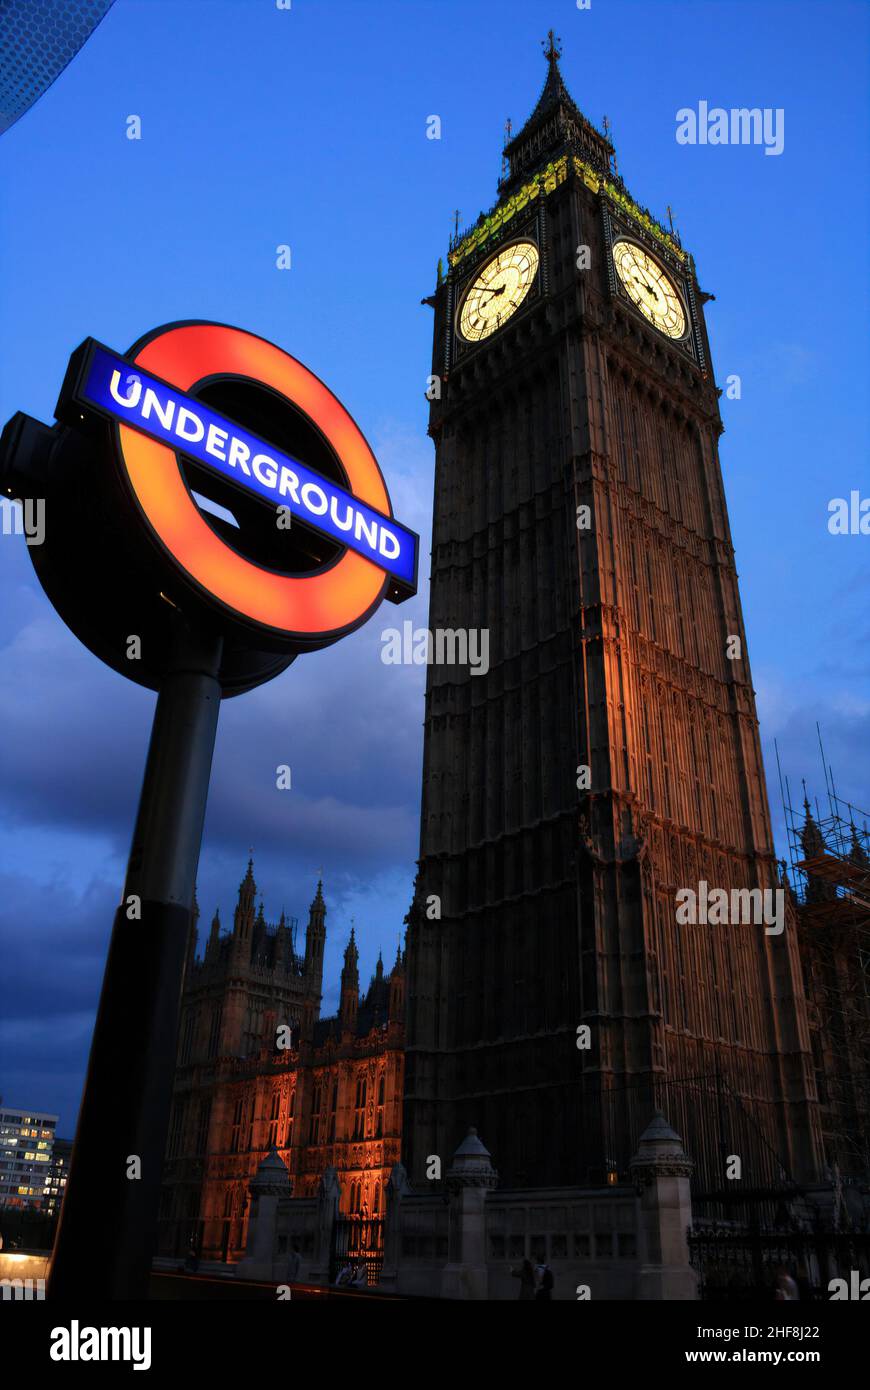 The famous Big ben clock tower, London UK Stock Photo